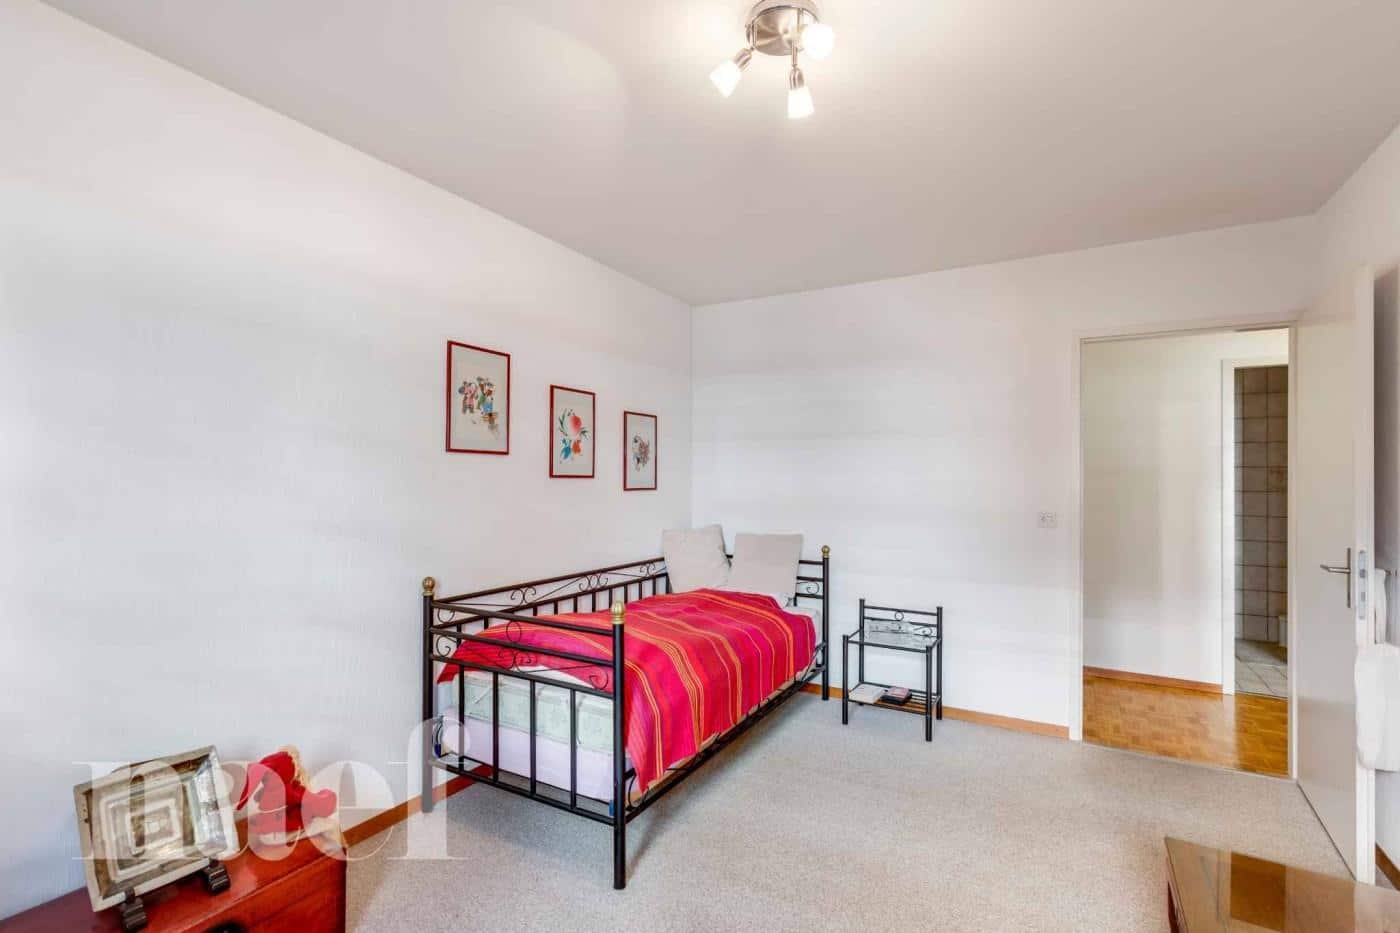 À vendre : Appartement 3 chambres Clarens / Montreux - Ref : 39099 | Naef Immobilier